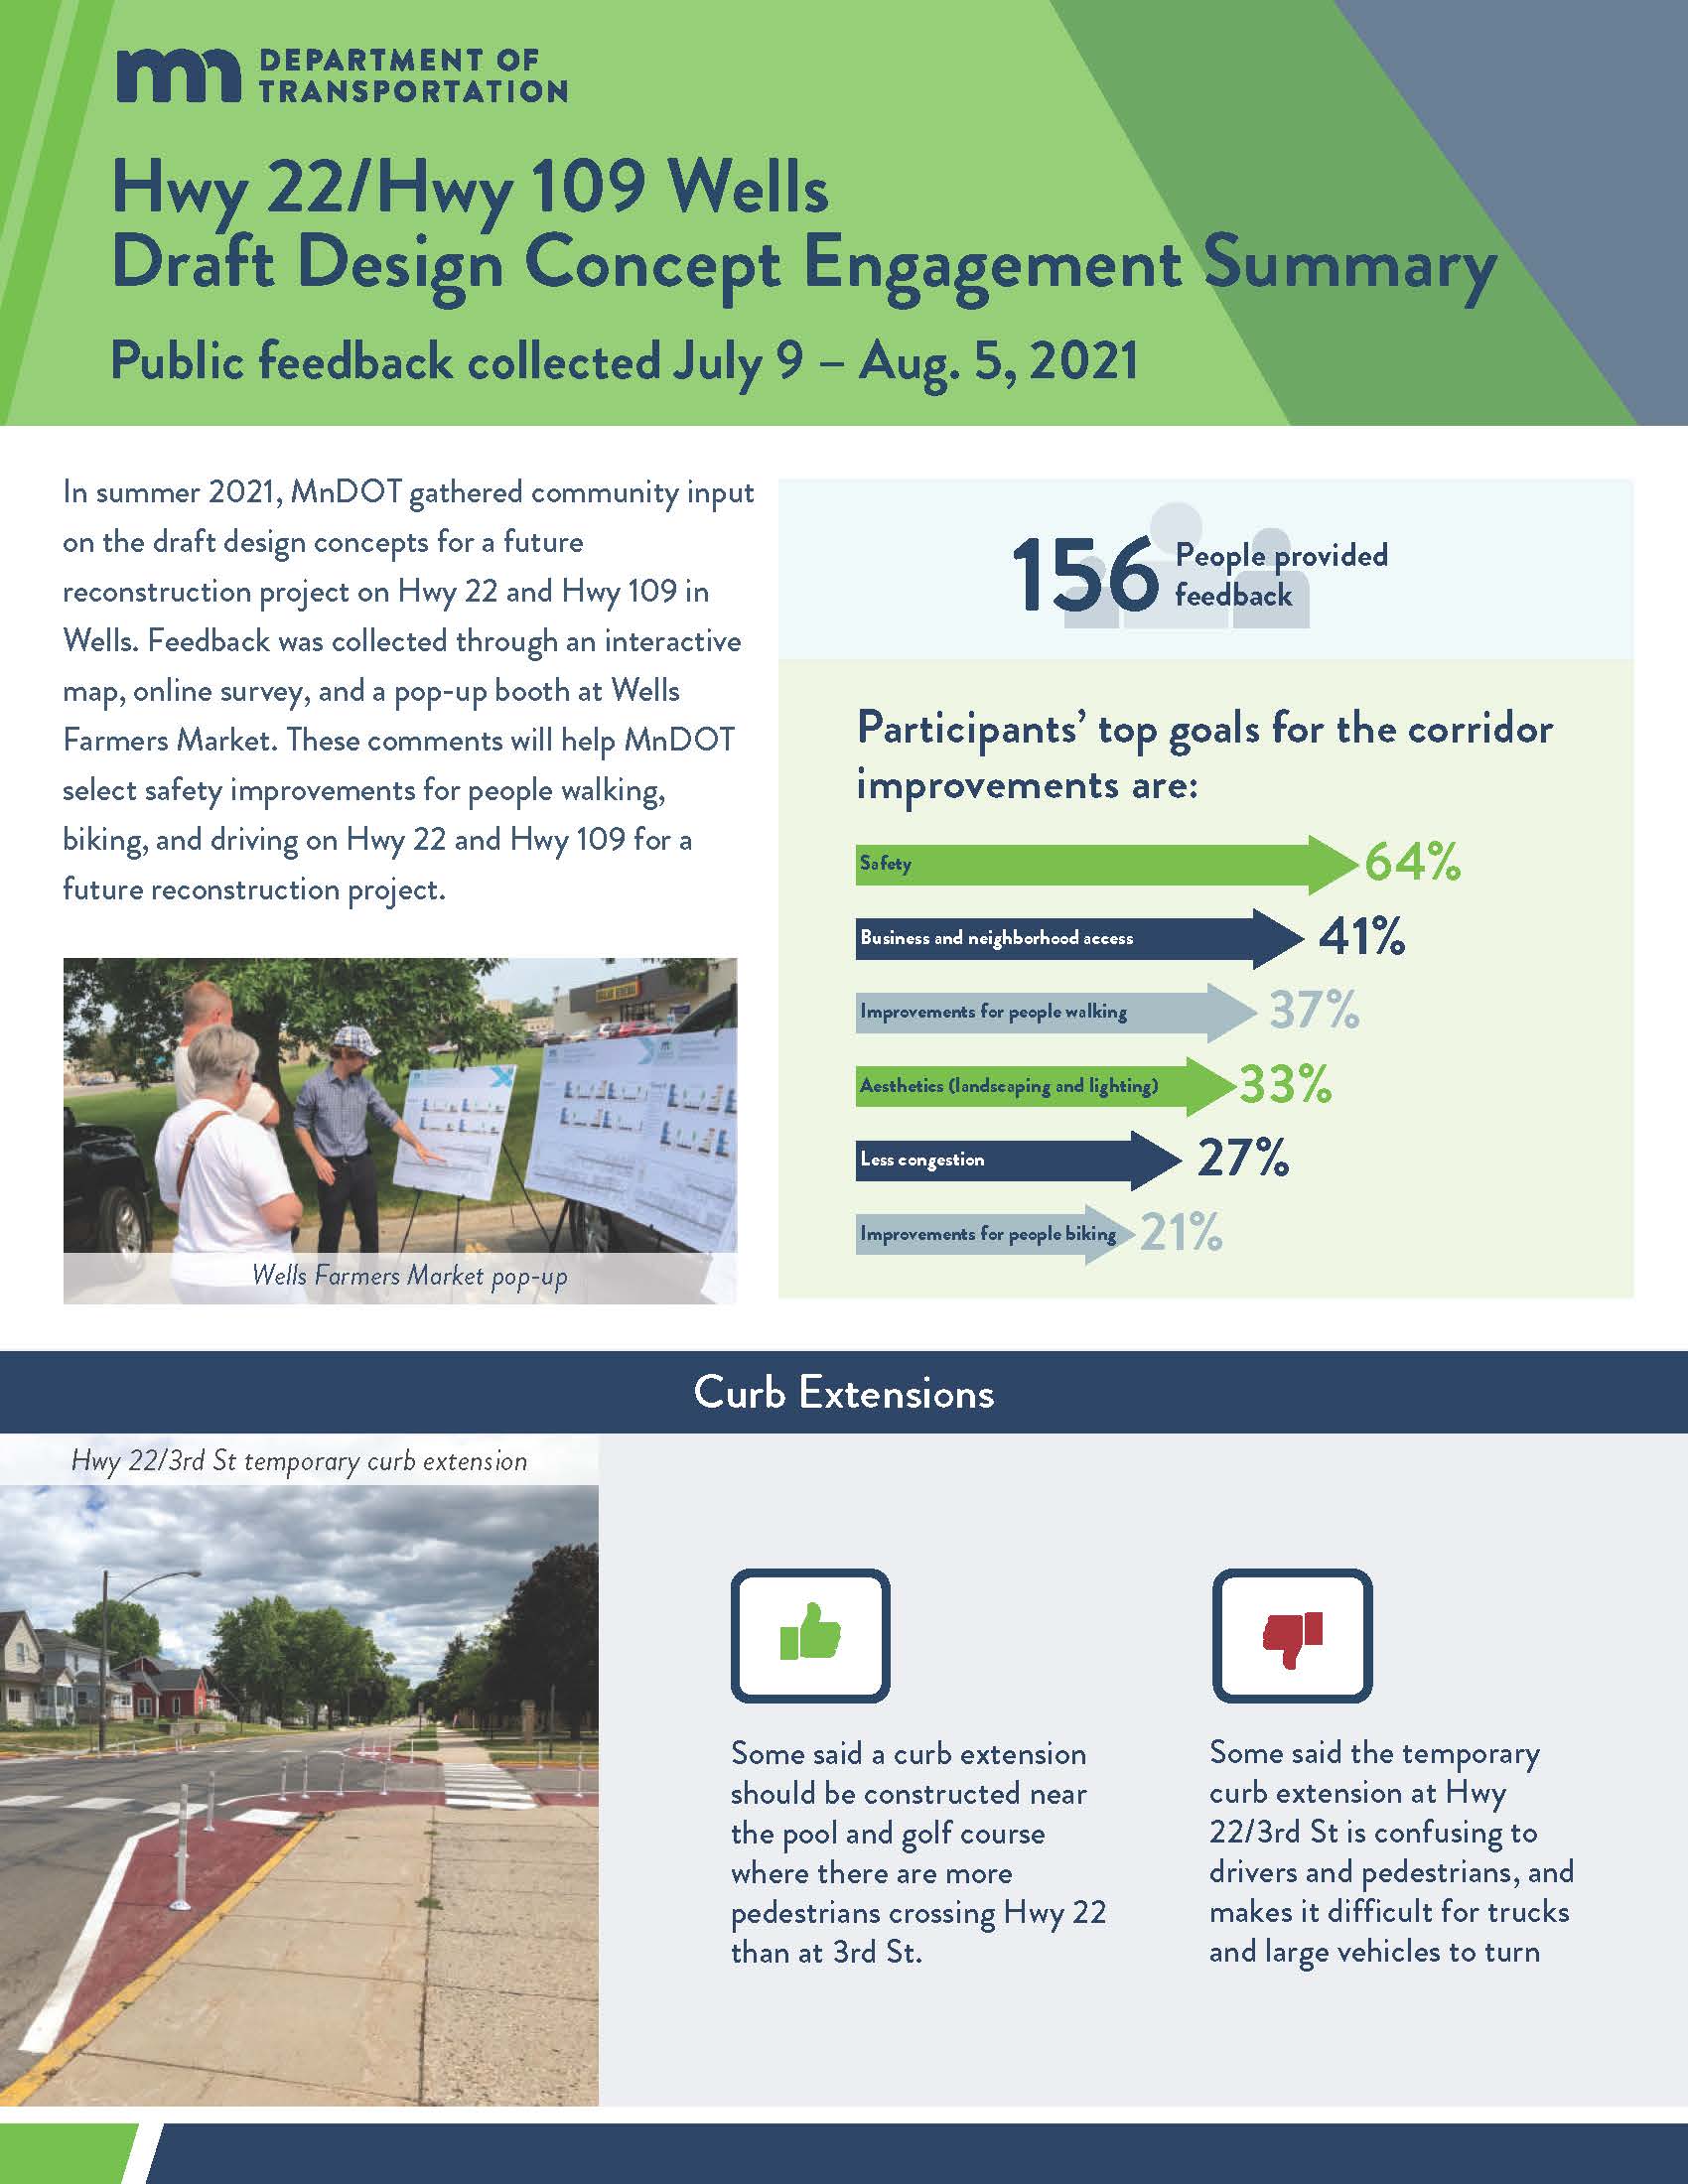 Draft design concept engagement summary